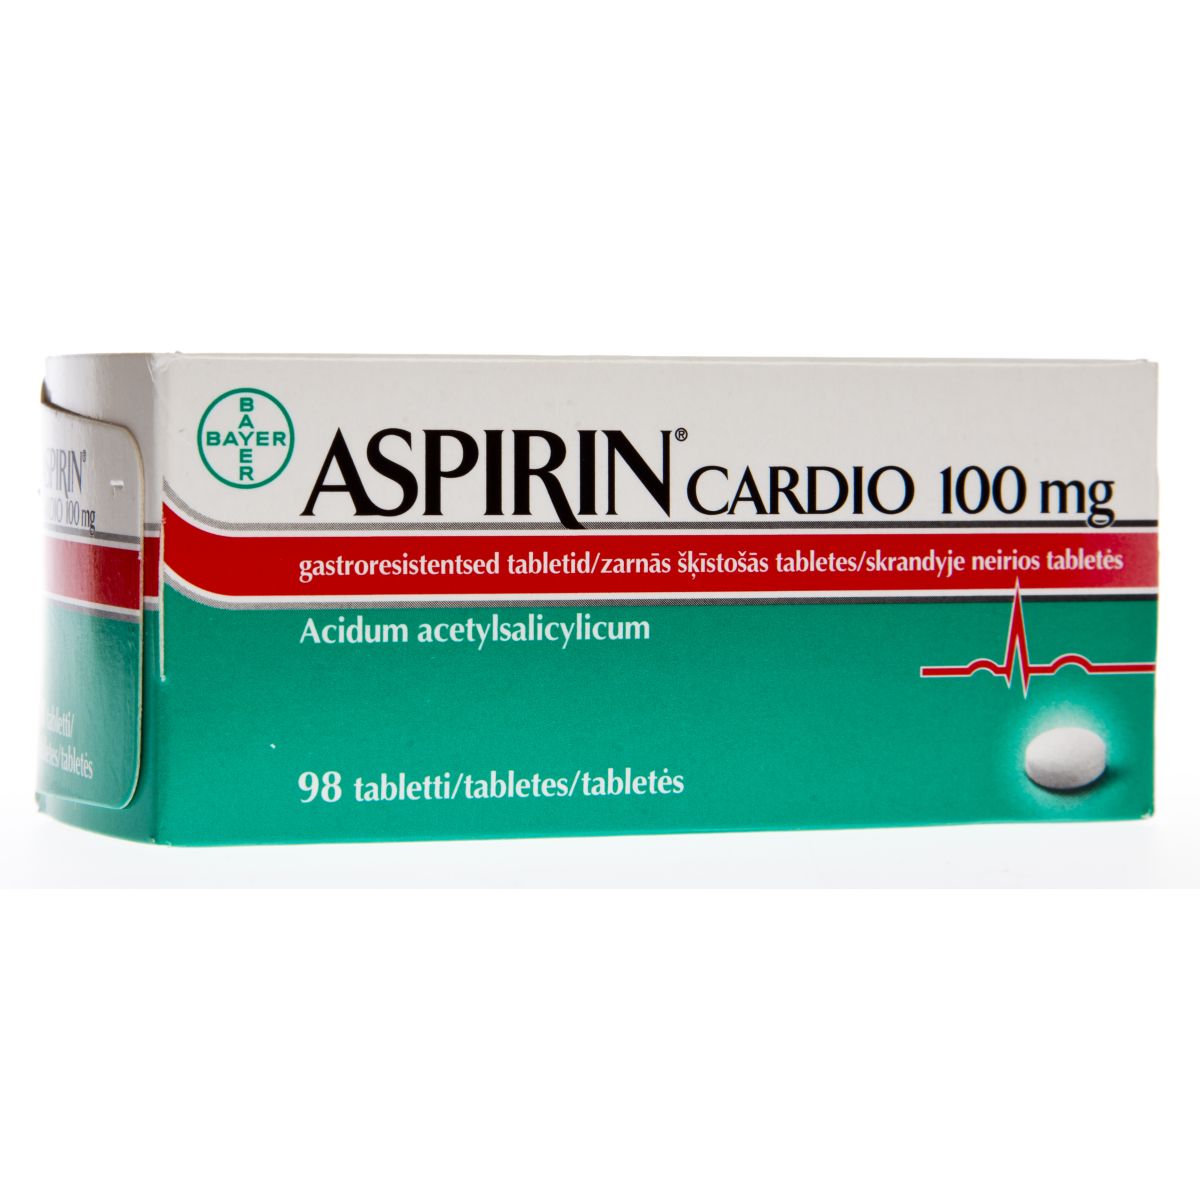 ASPIRIN CARDIO GASTRORESIST TBL 100MG N98